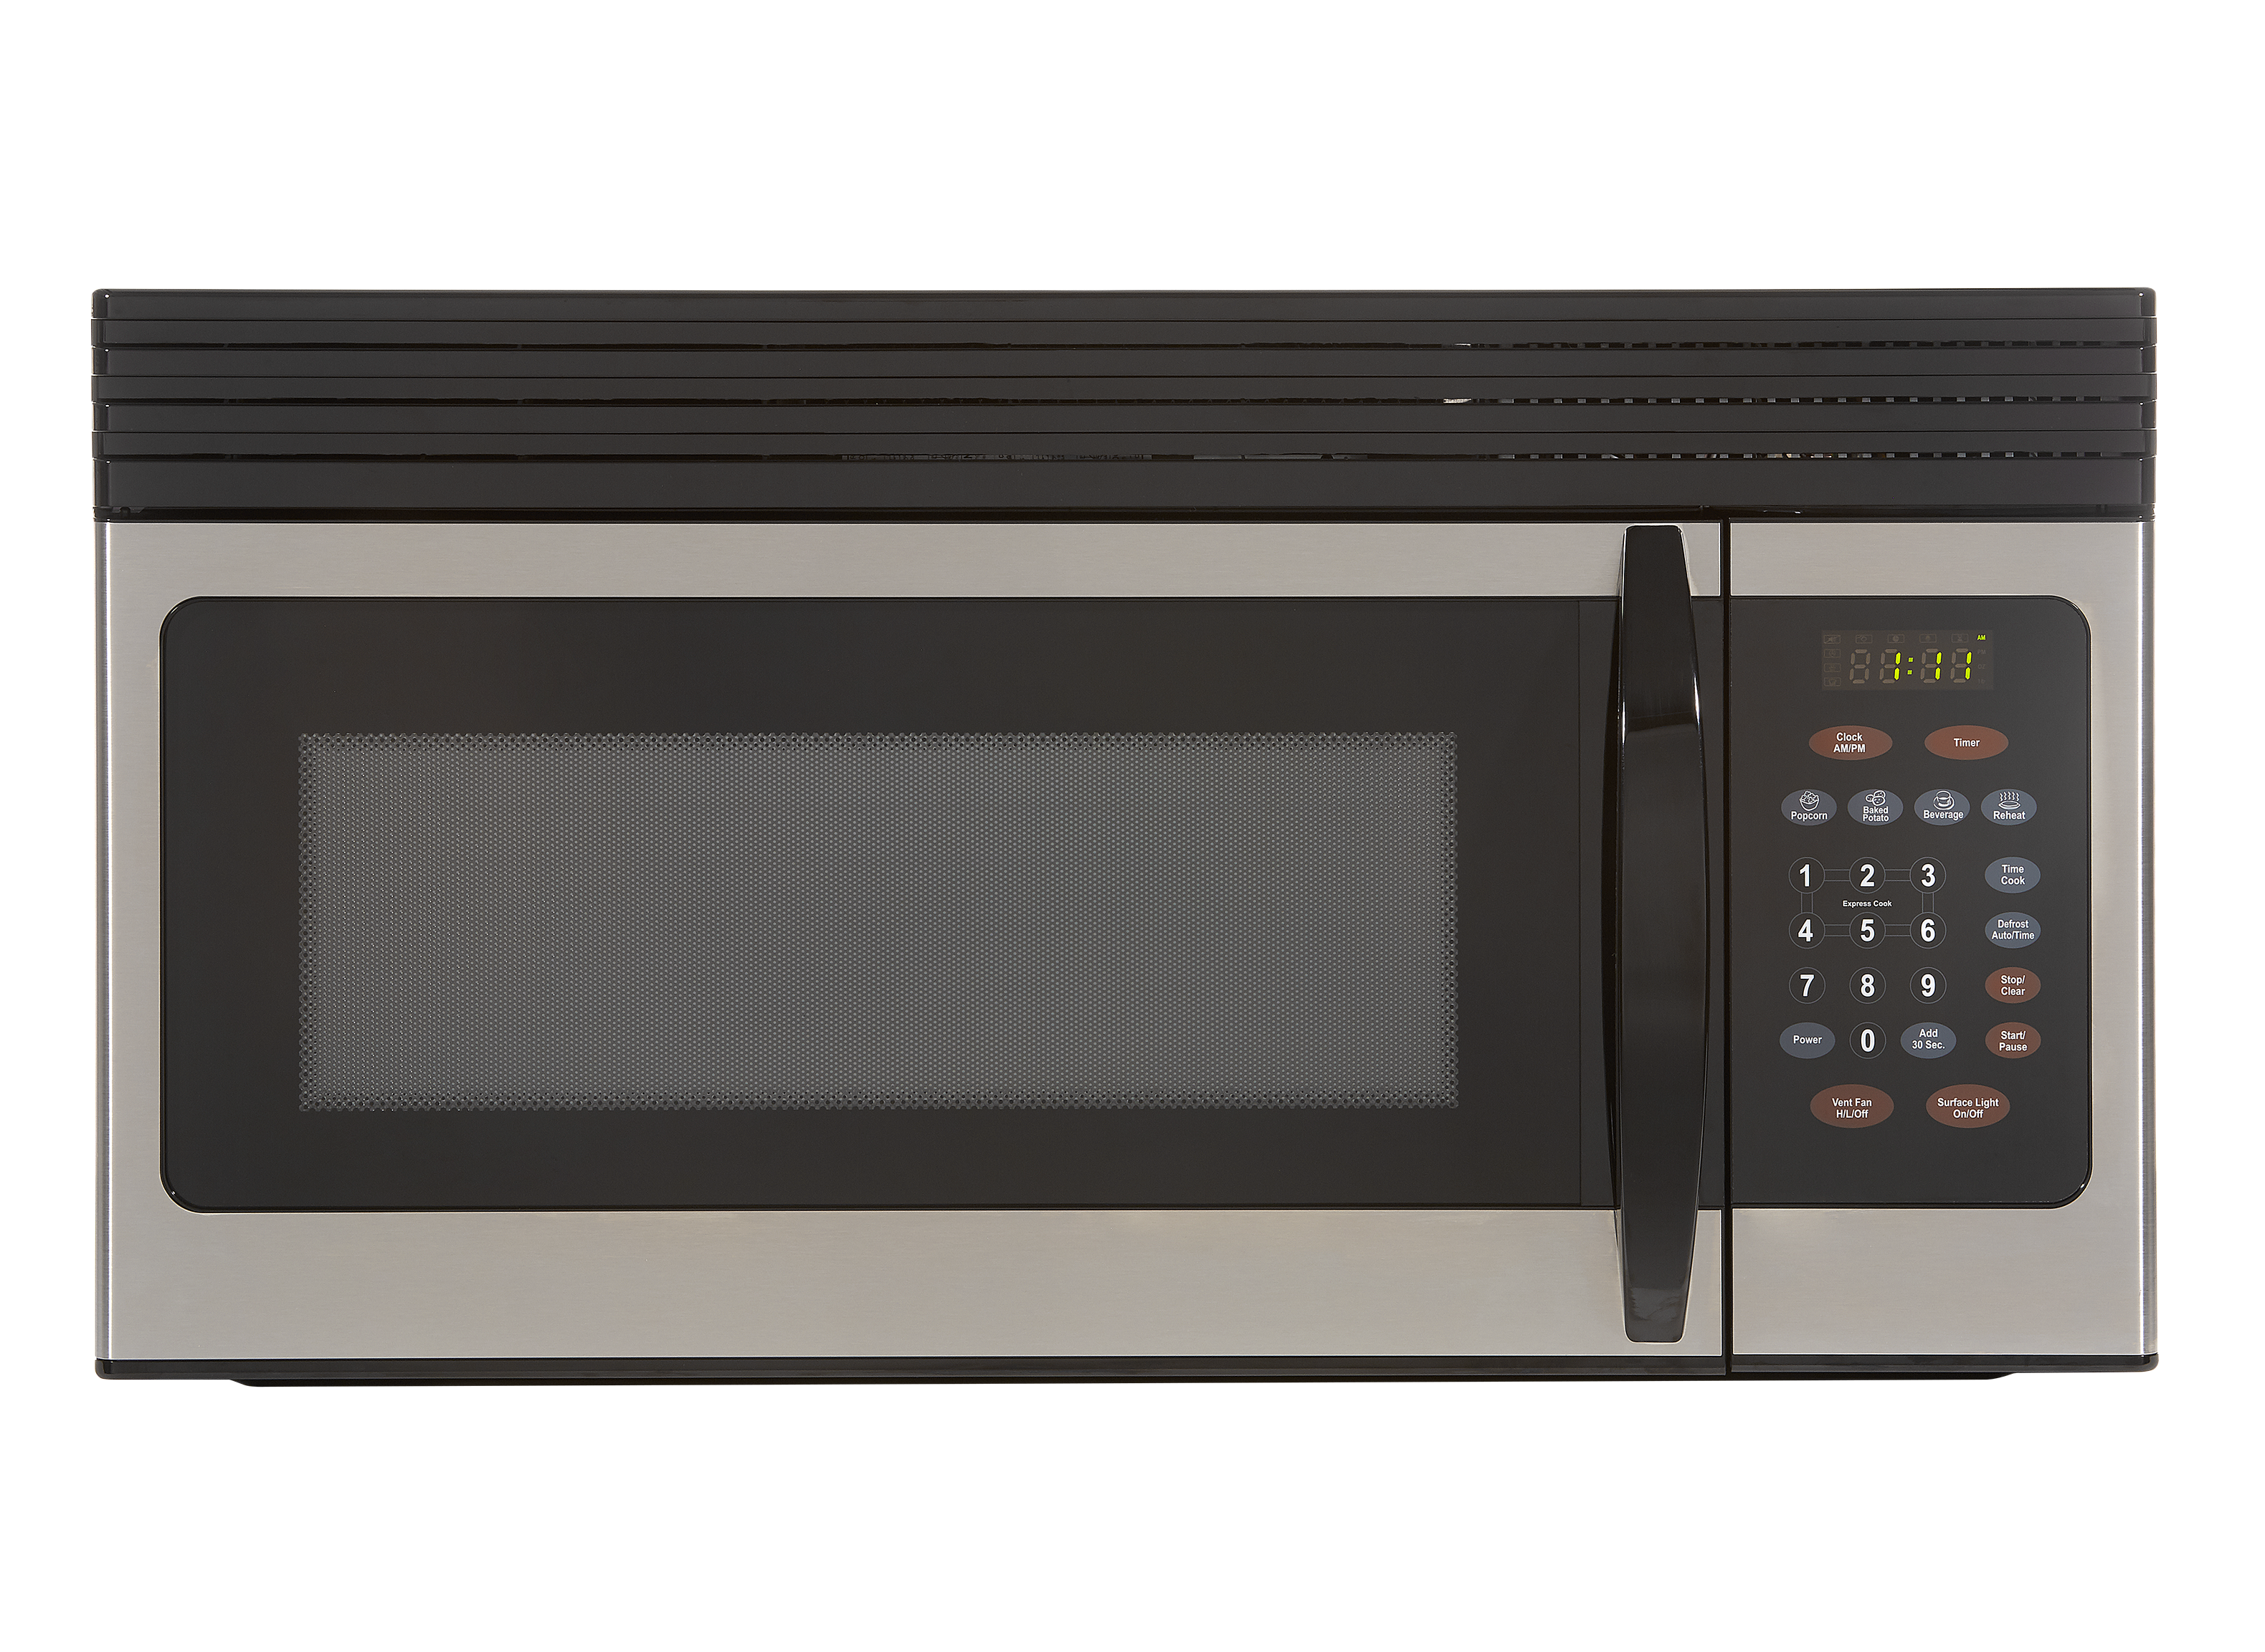 https://crdms.images.consumerreports.org/prod/products/cr/models/400002-over-the-range-microwave-ovens-black-decker-em044kin-p-10009813.png